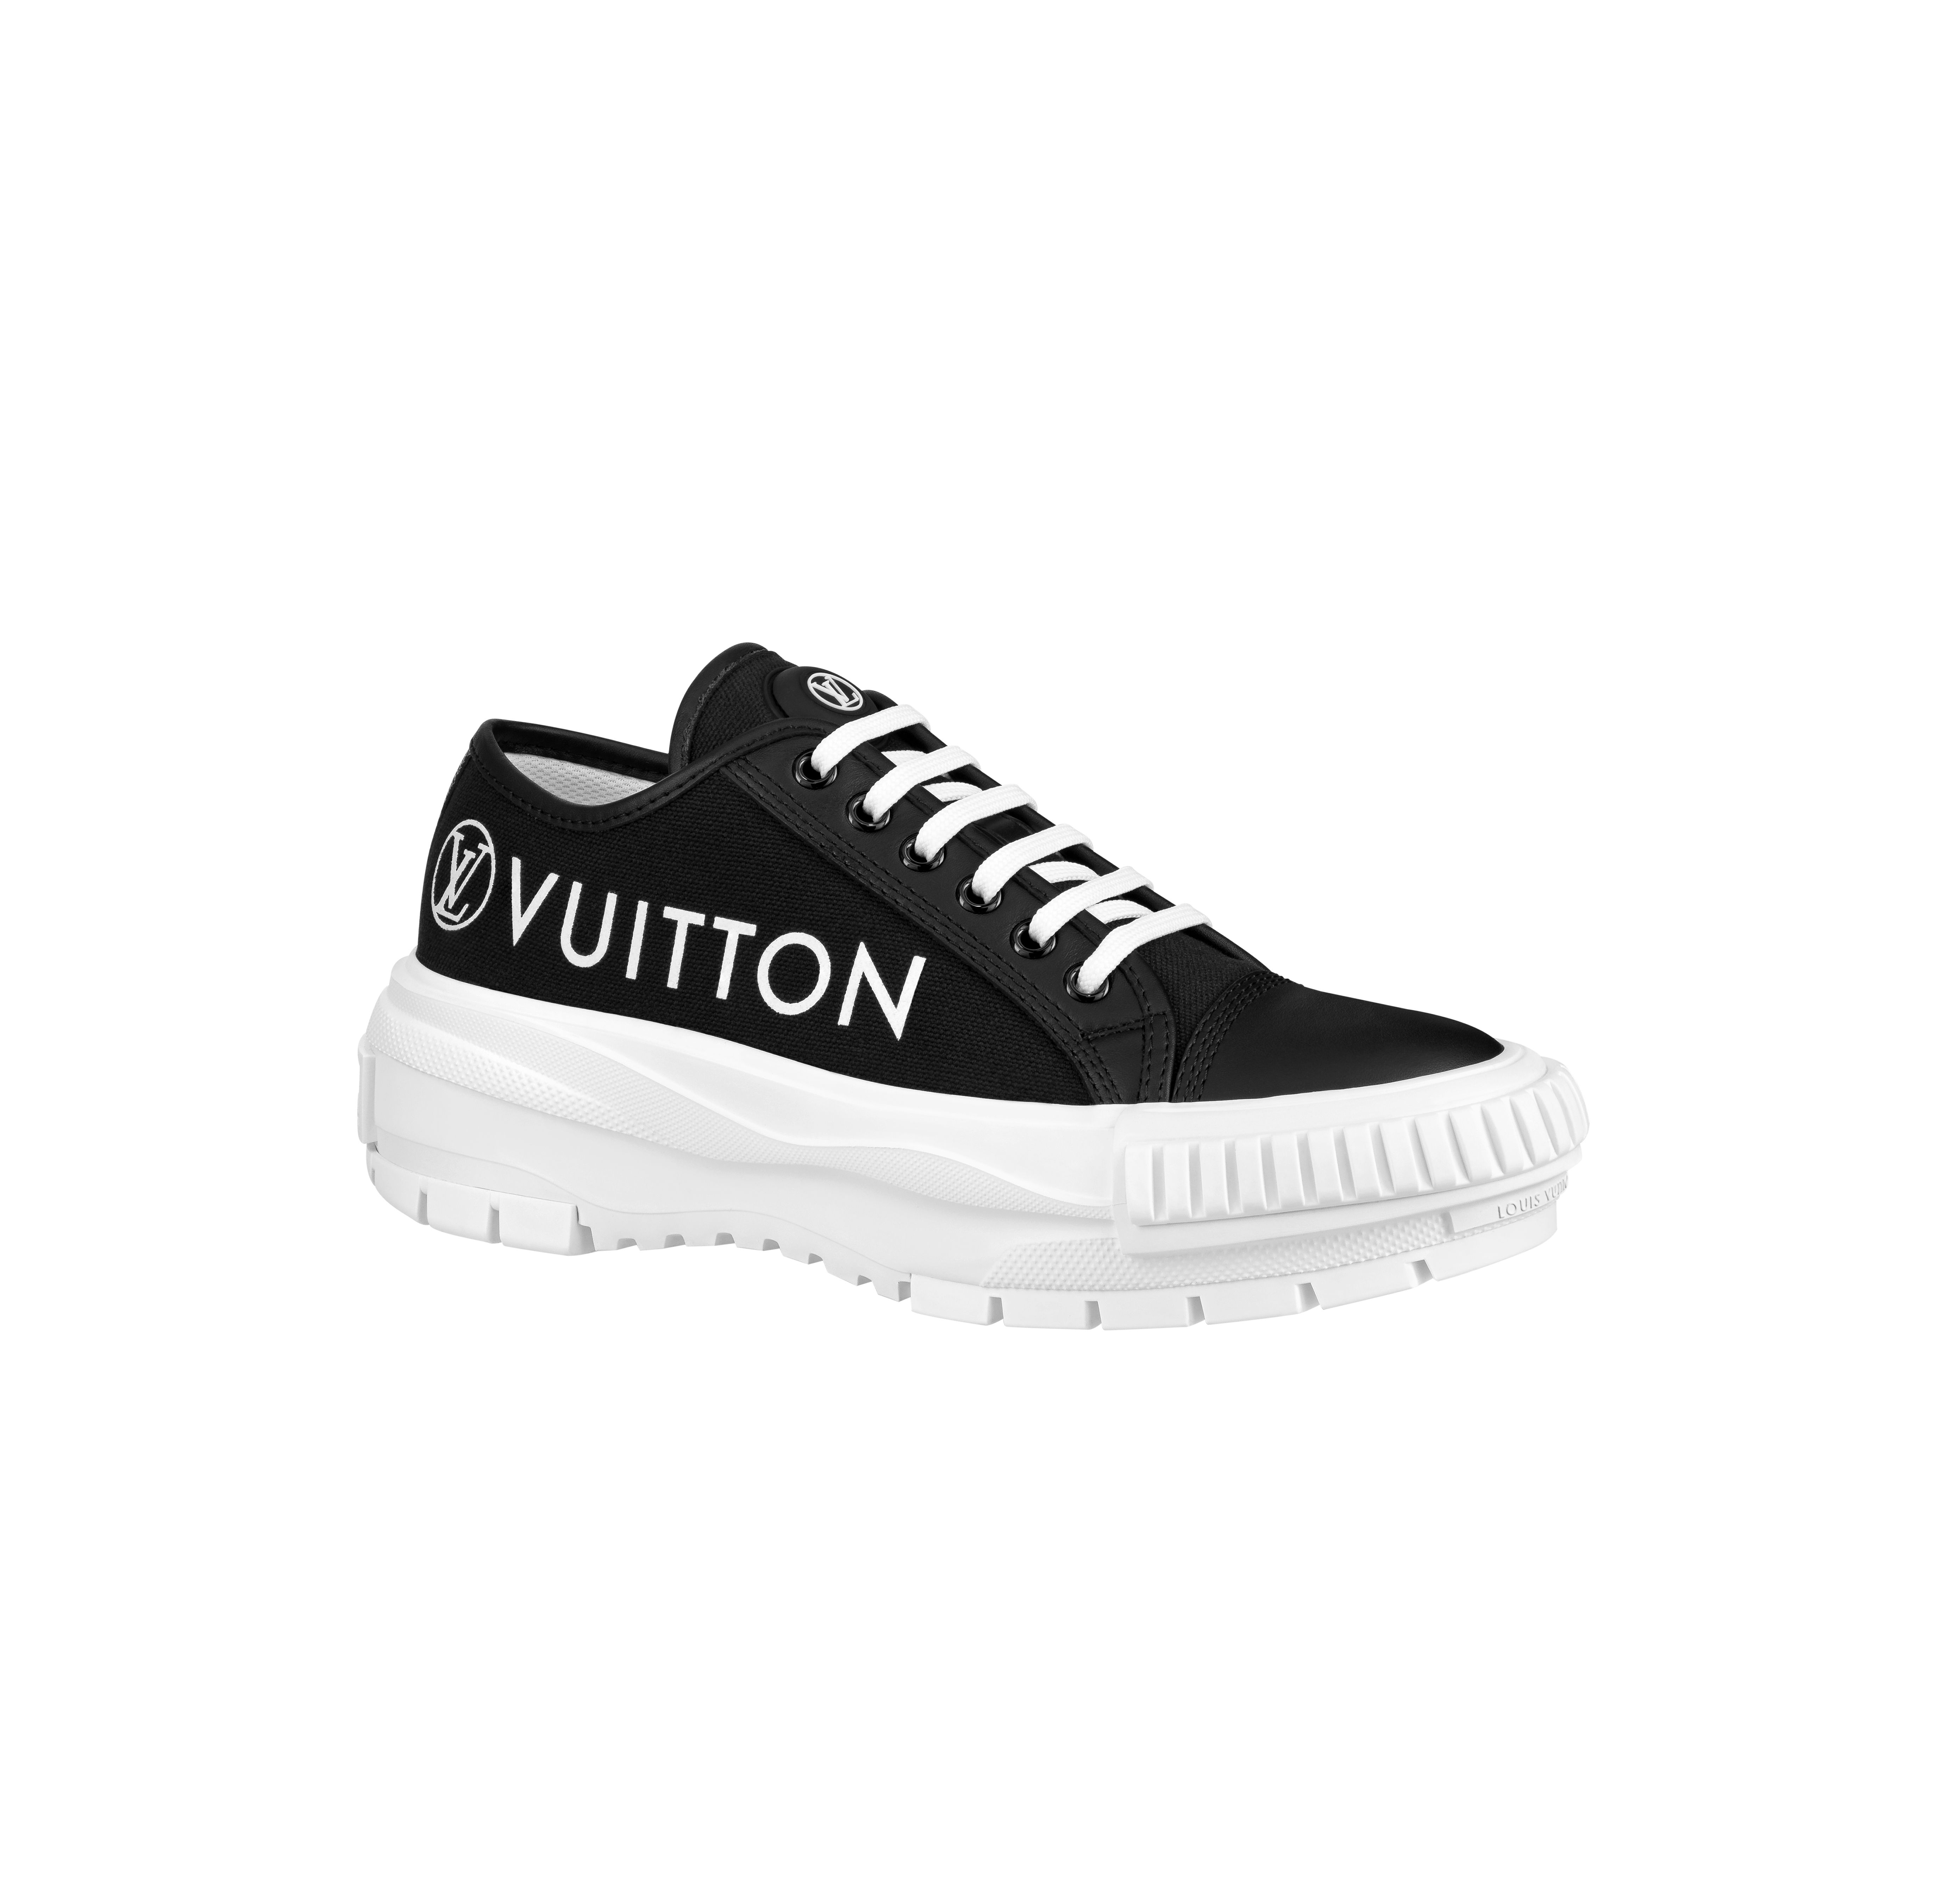 Zapatillas Para Mujer Louis Vuitton Time Out, negro